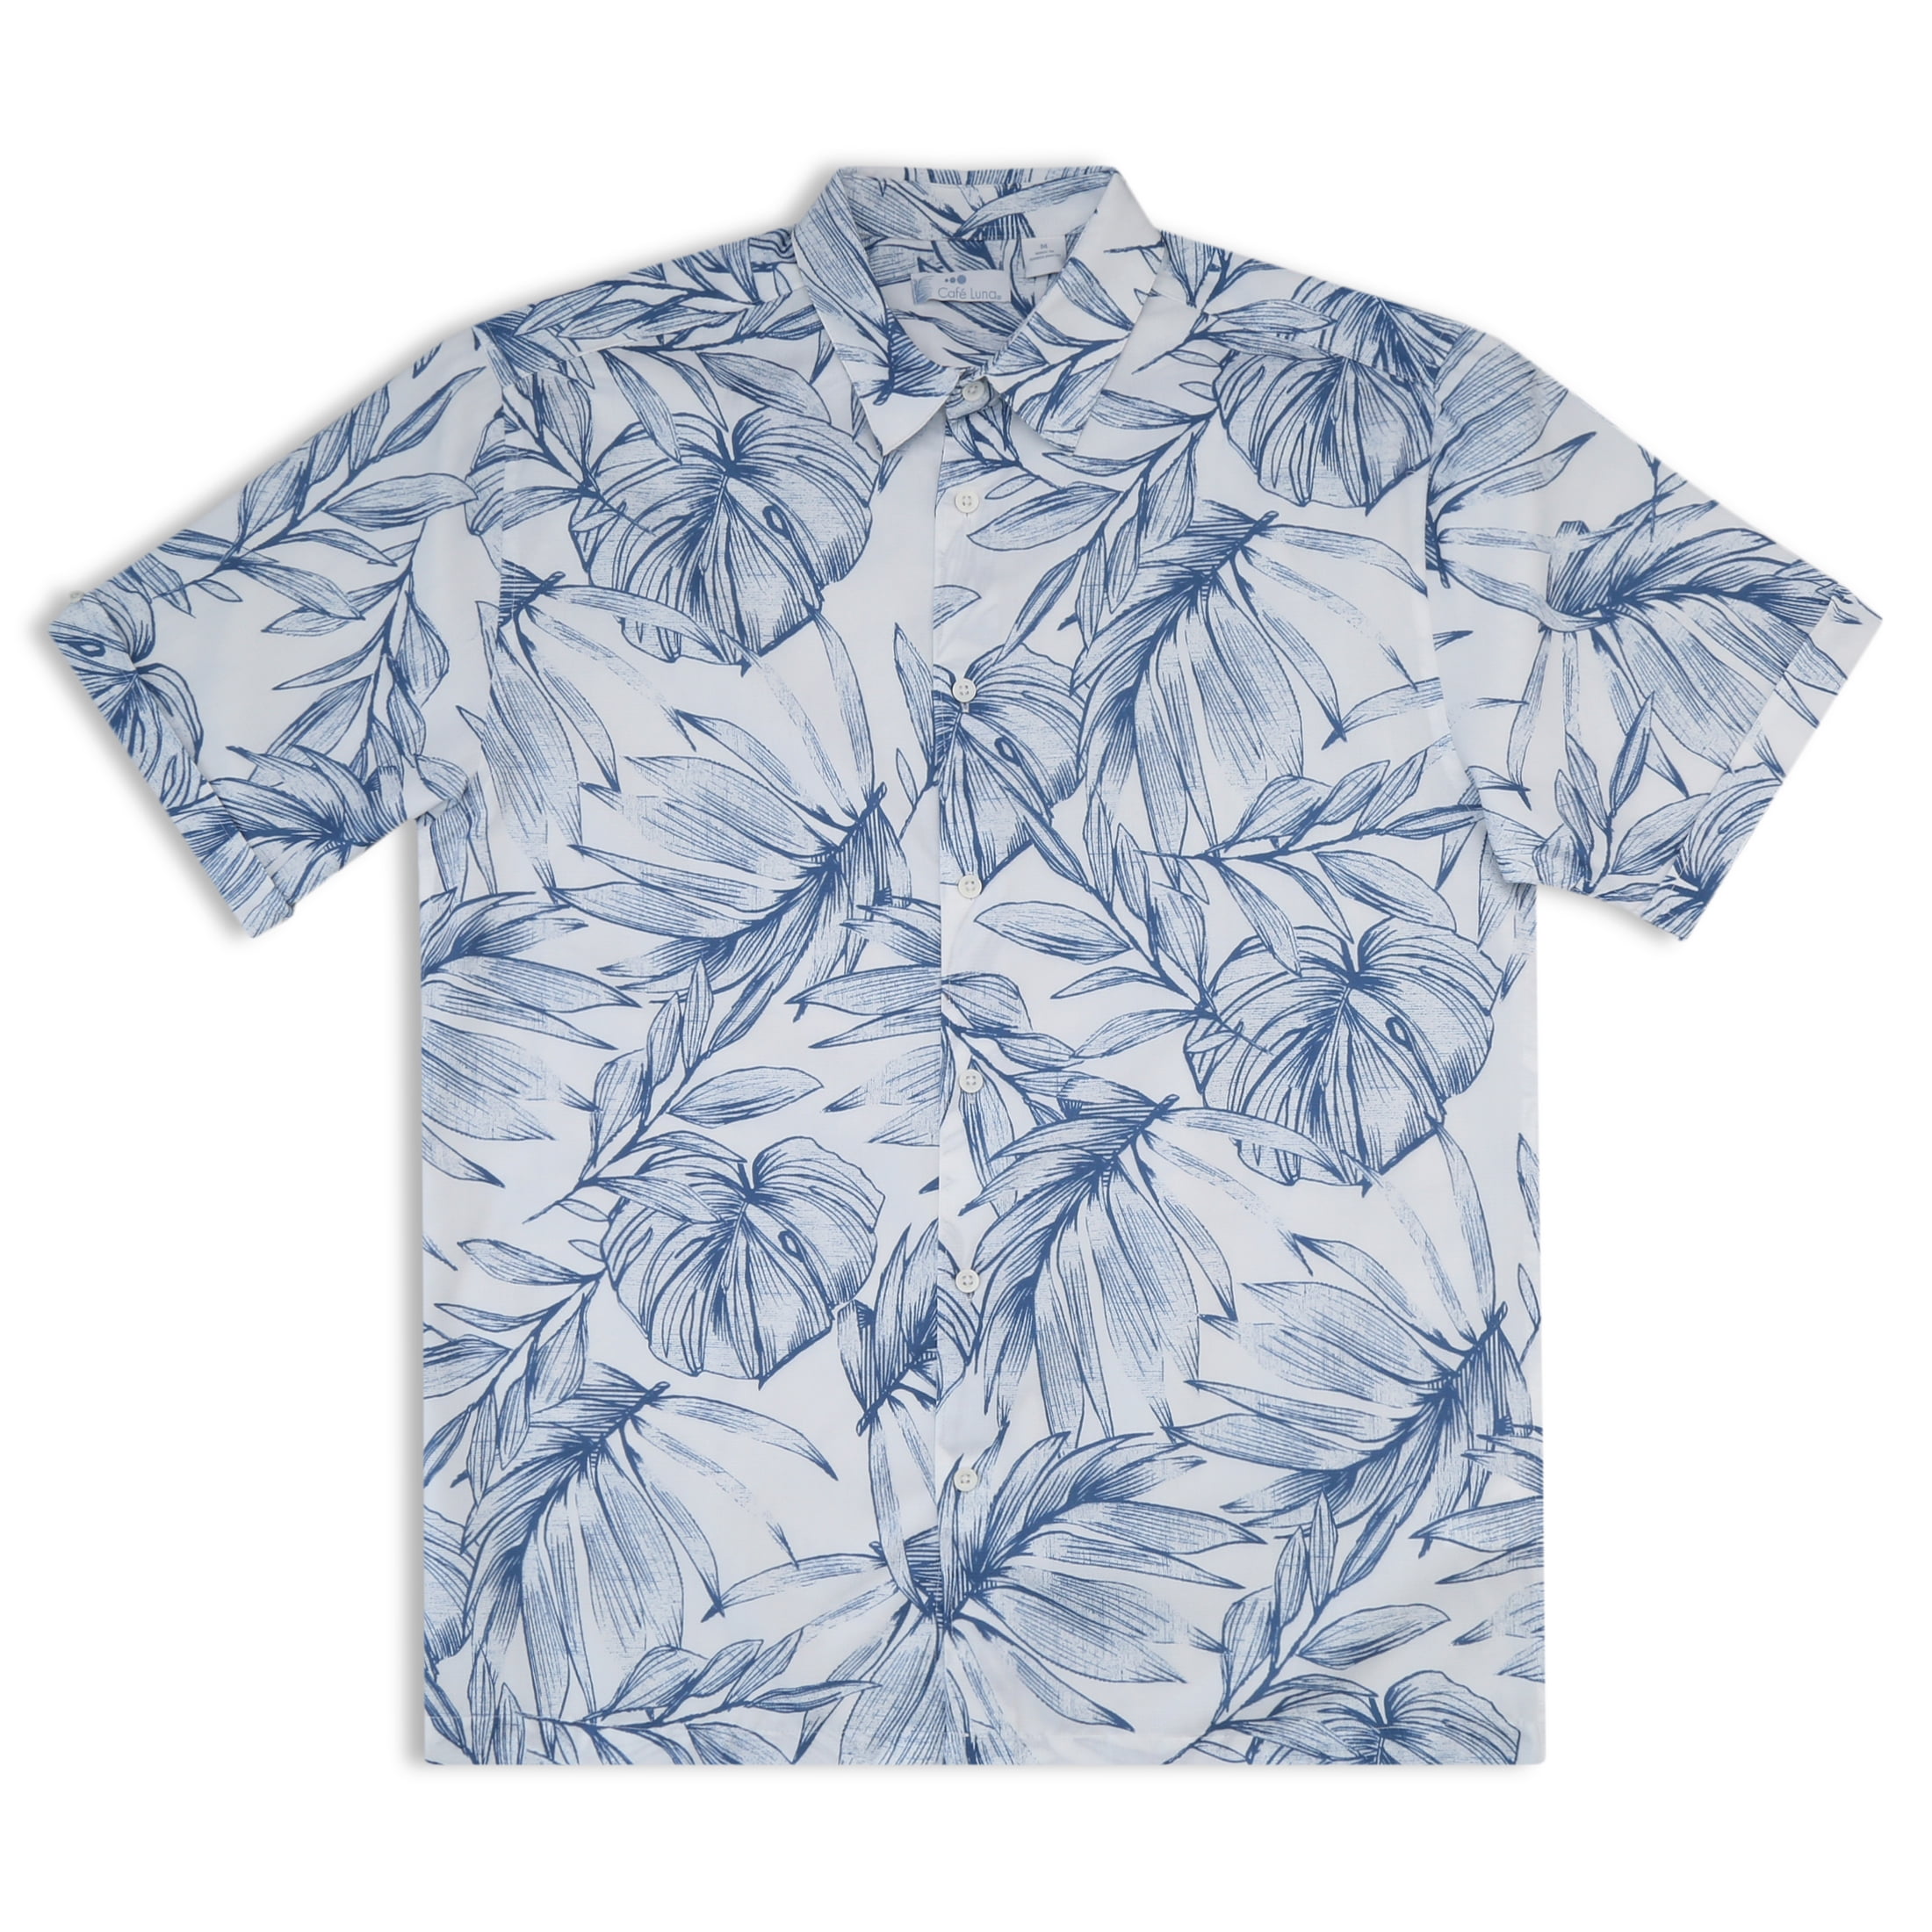 Cafe Luna Men's Short Sleeve Printed Tropical Woven Shirt - Walmart.com